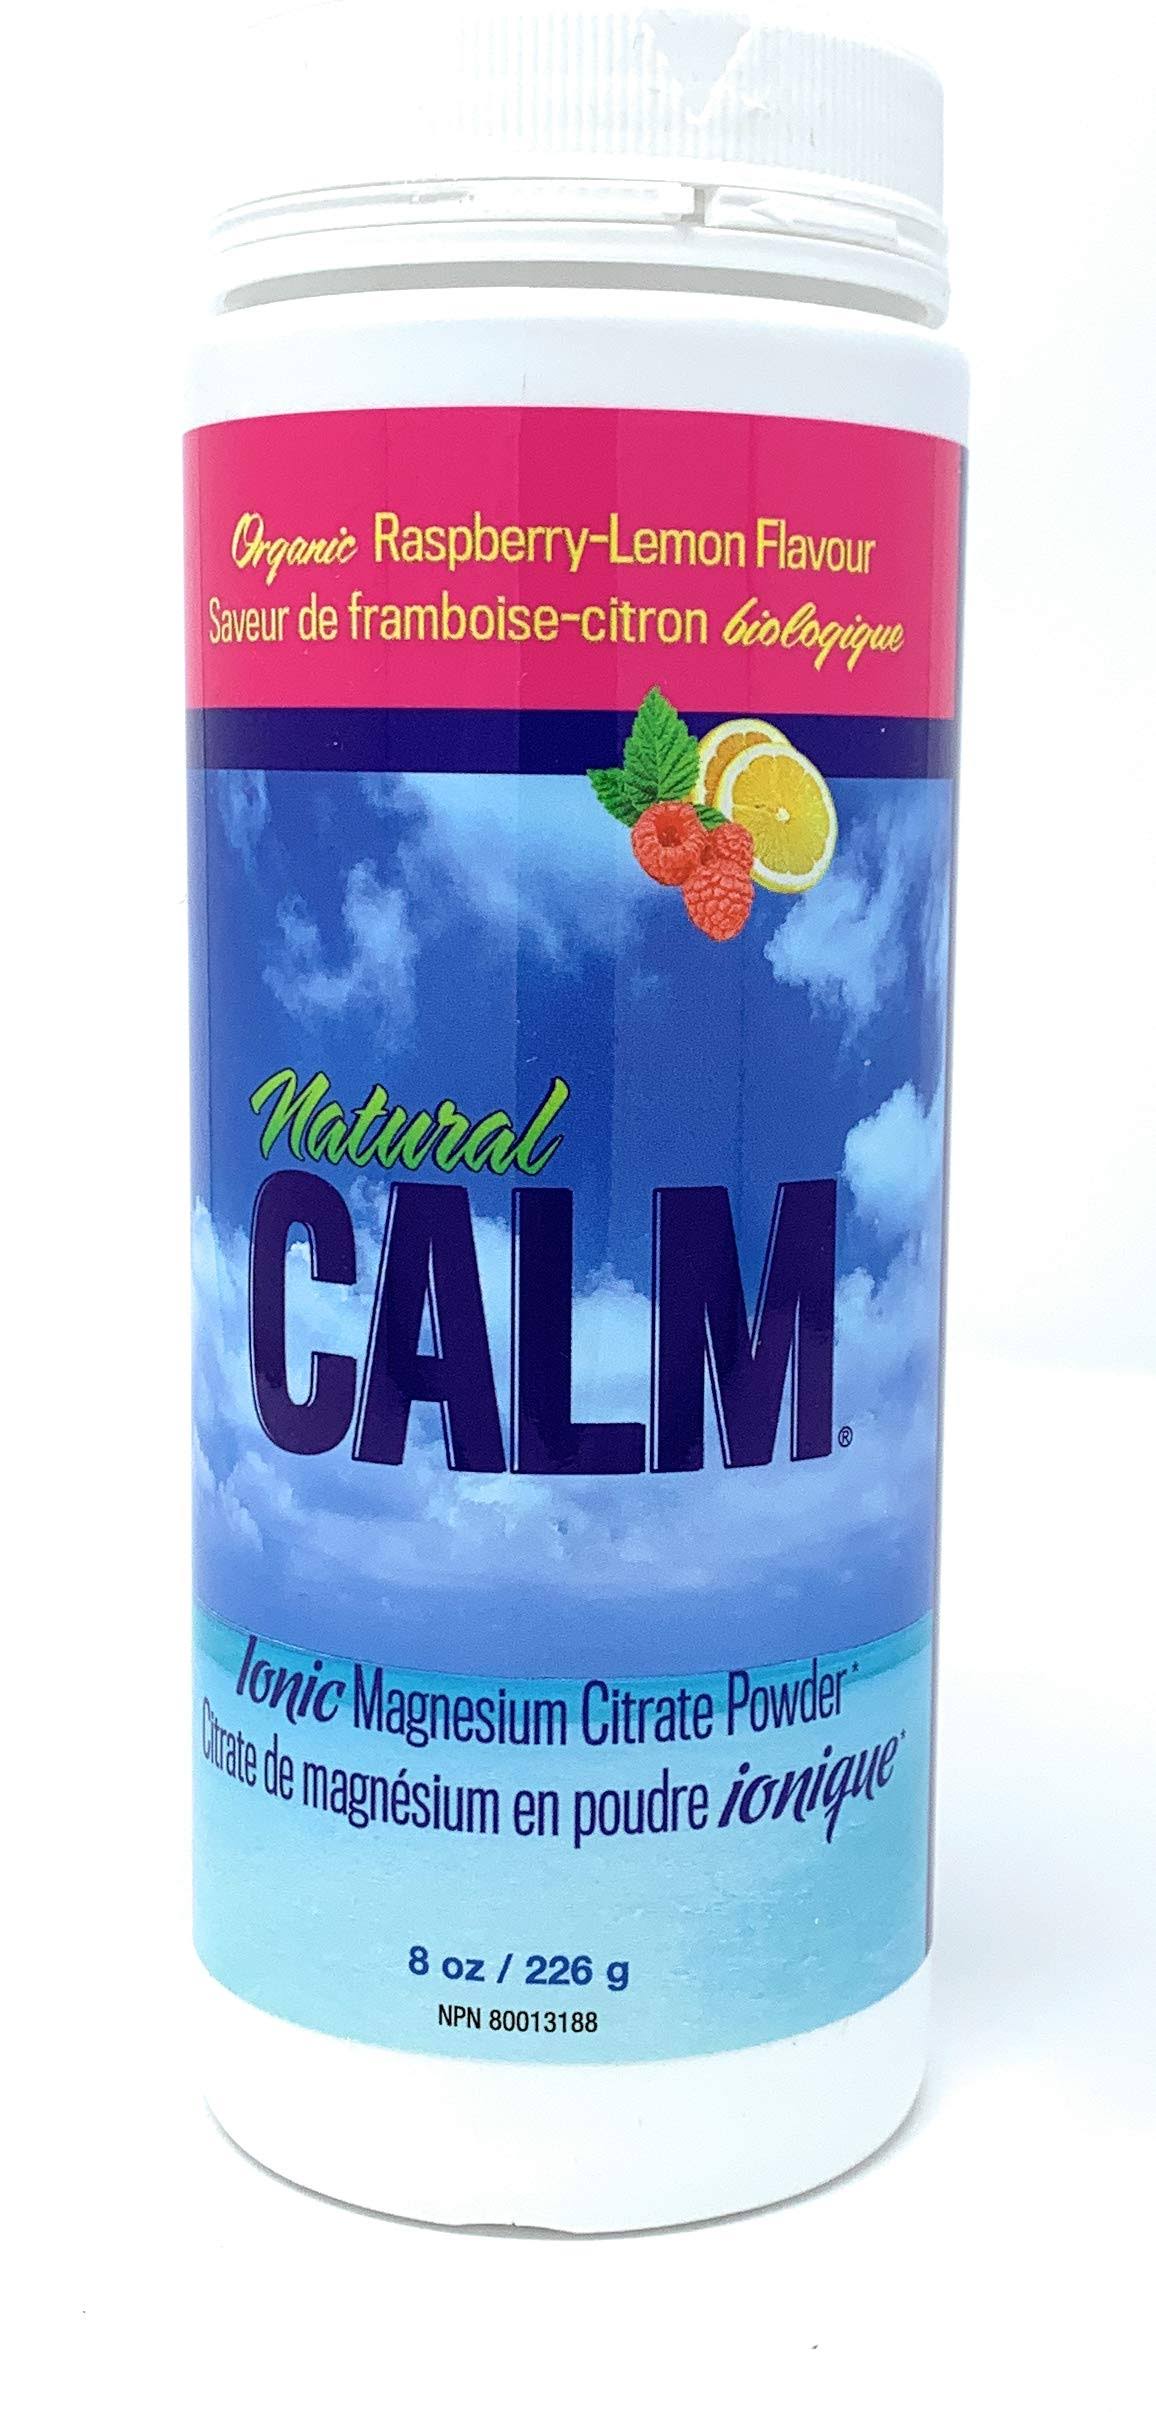 Natural Calm, Ionic Magnesium Citrate Powder, Organic Raspberry-Lemon